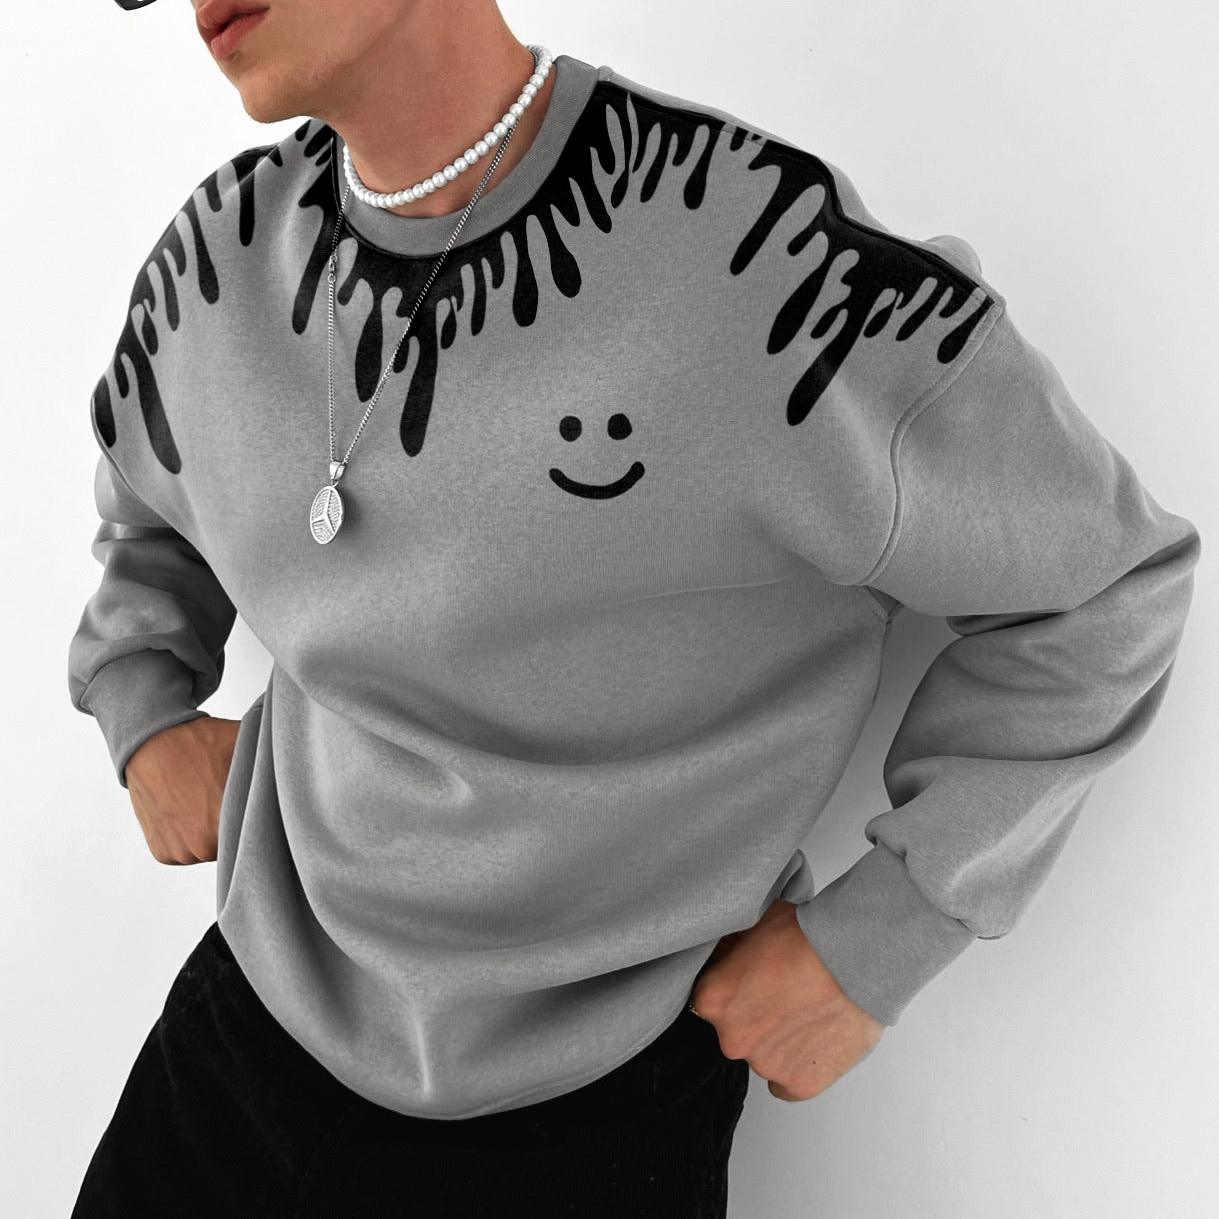 Men's Fashion Smiley Printed Chic Oversized Casual Sweatshirt